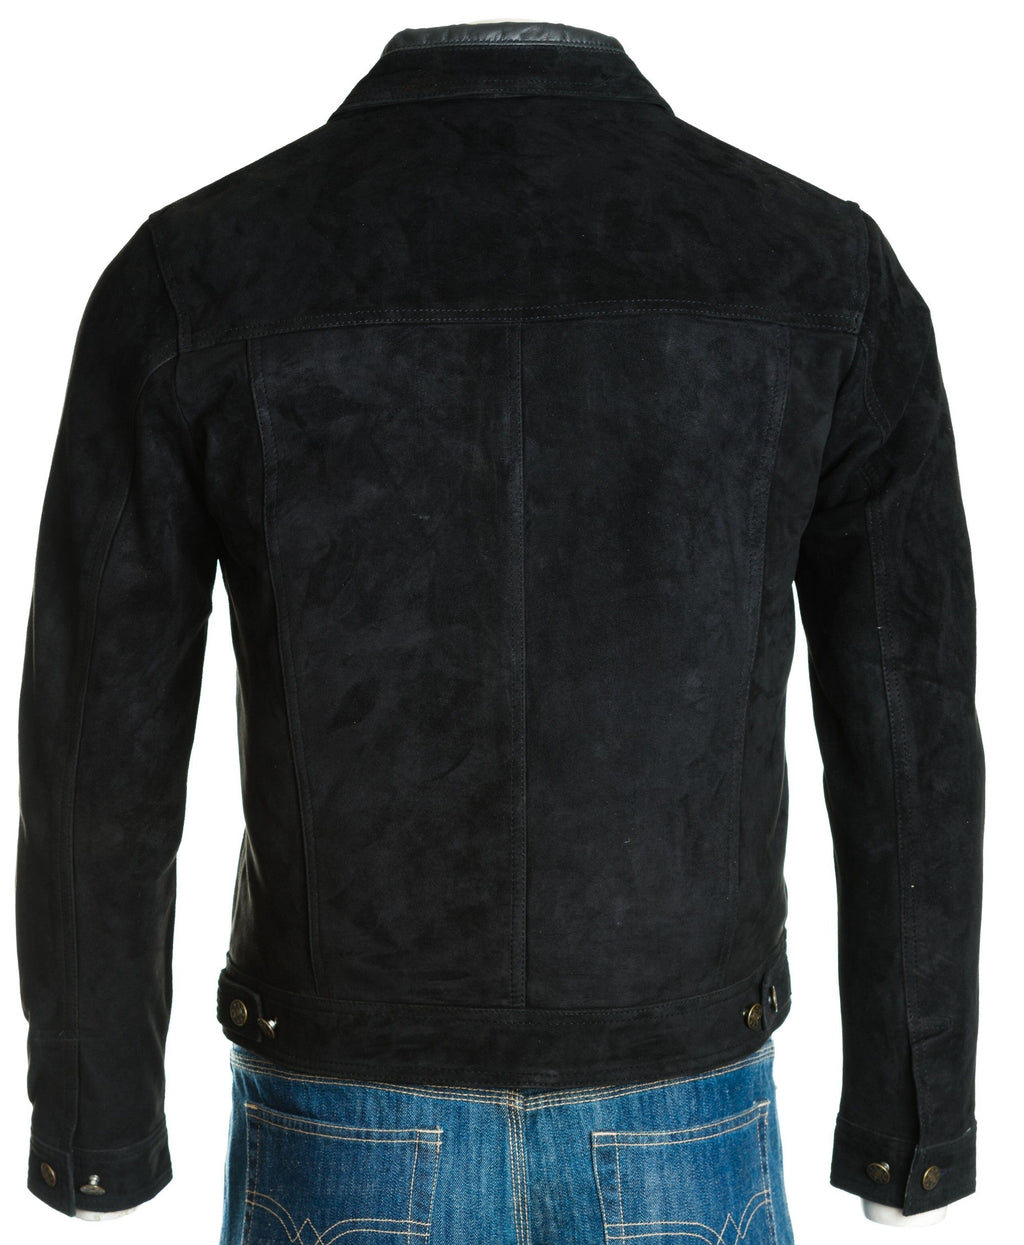 Men's Black Denim Shirt Style Suede Jacket: Antonio